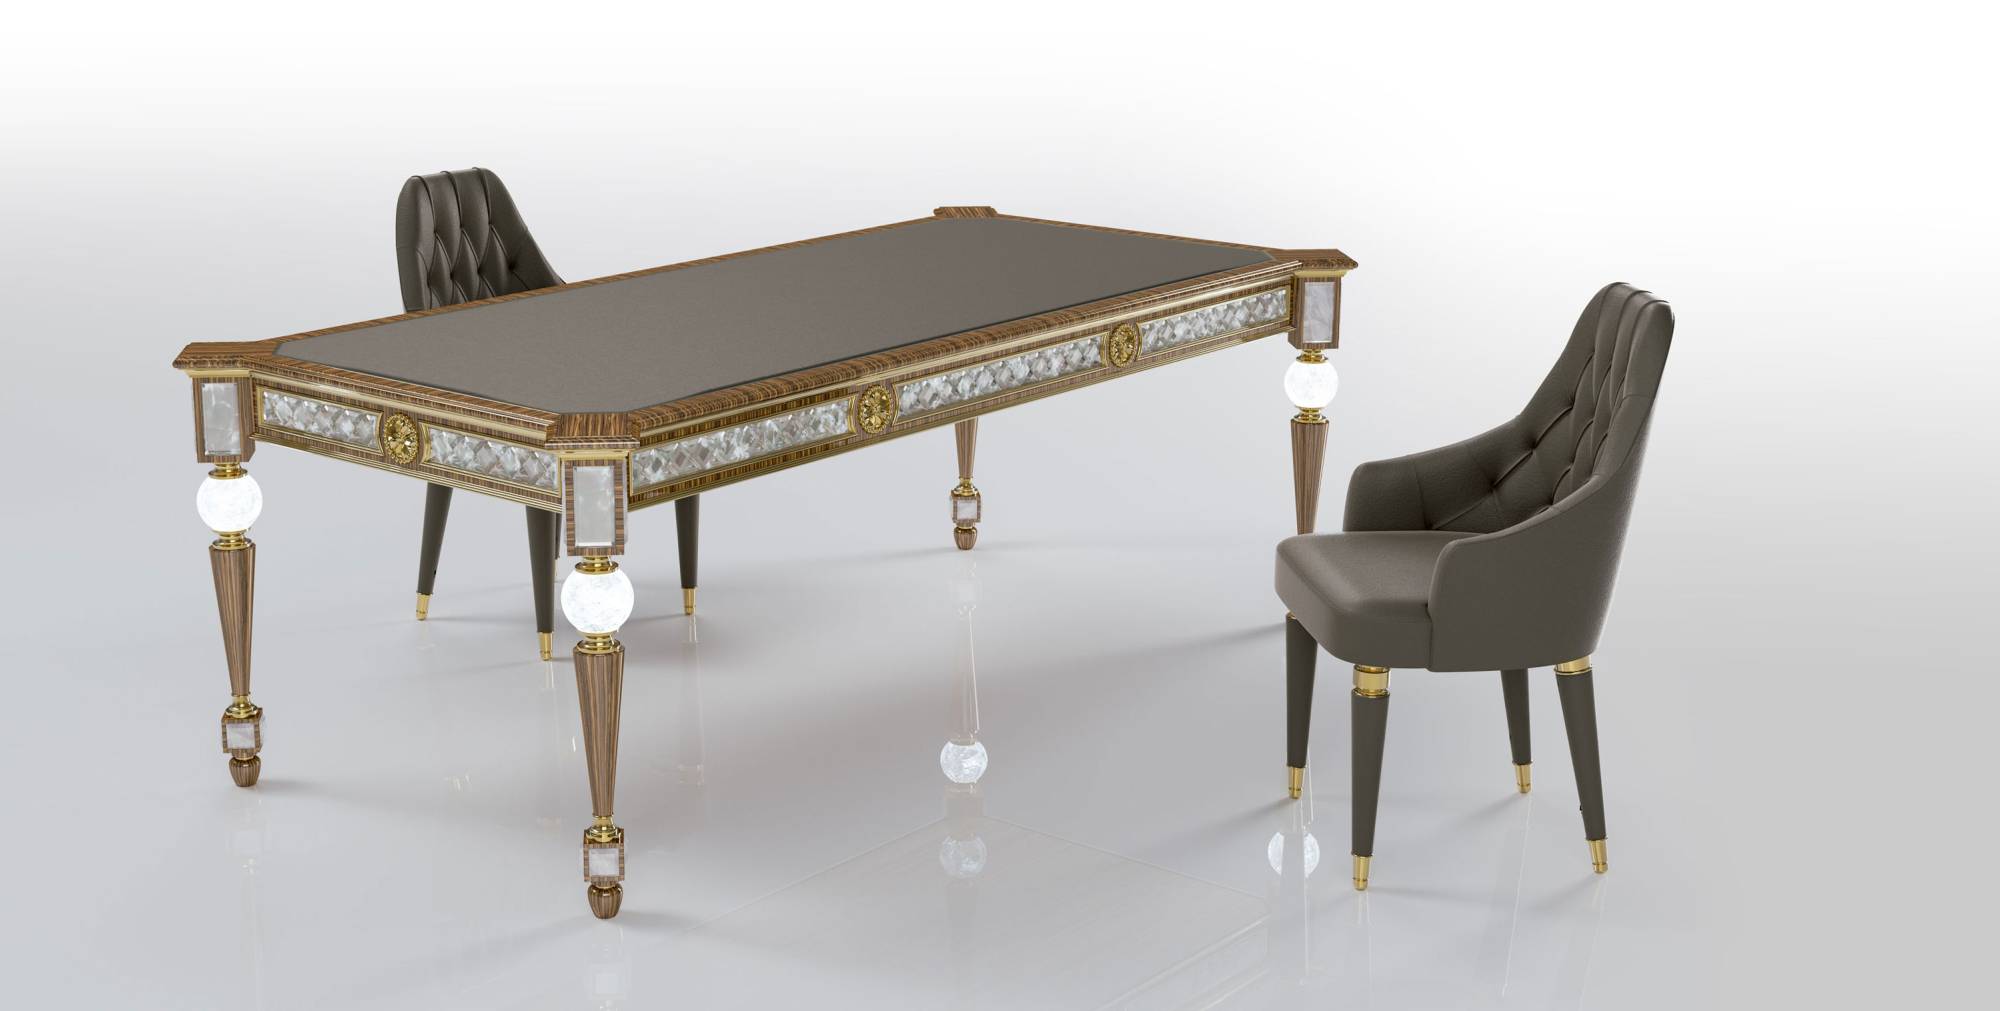 ART. 2338 – C.G. Capelletti Italian Luxury Classic Desks and writing desks. Made in Italy classic interior design